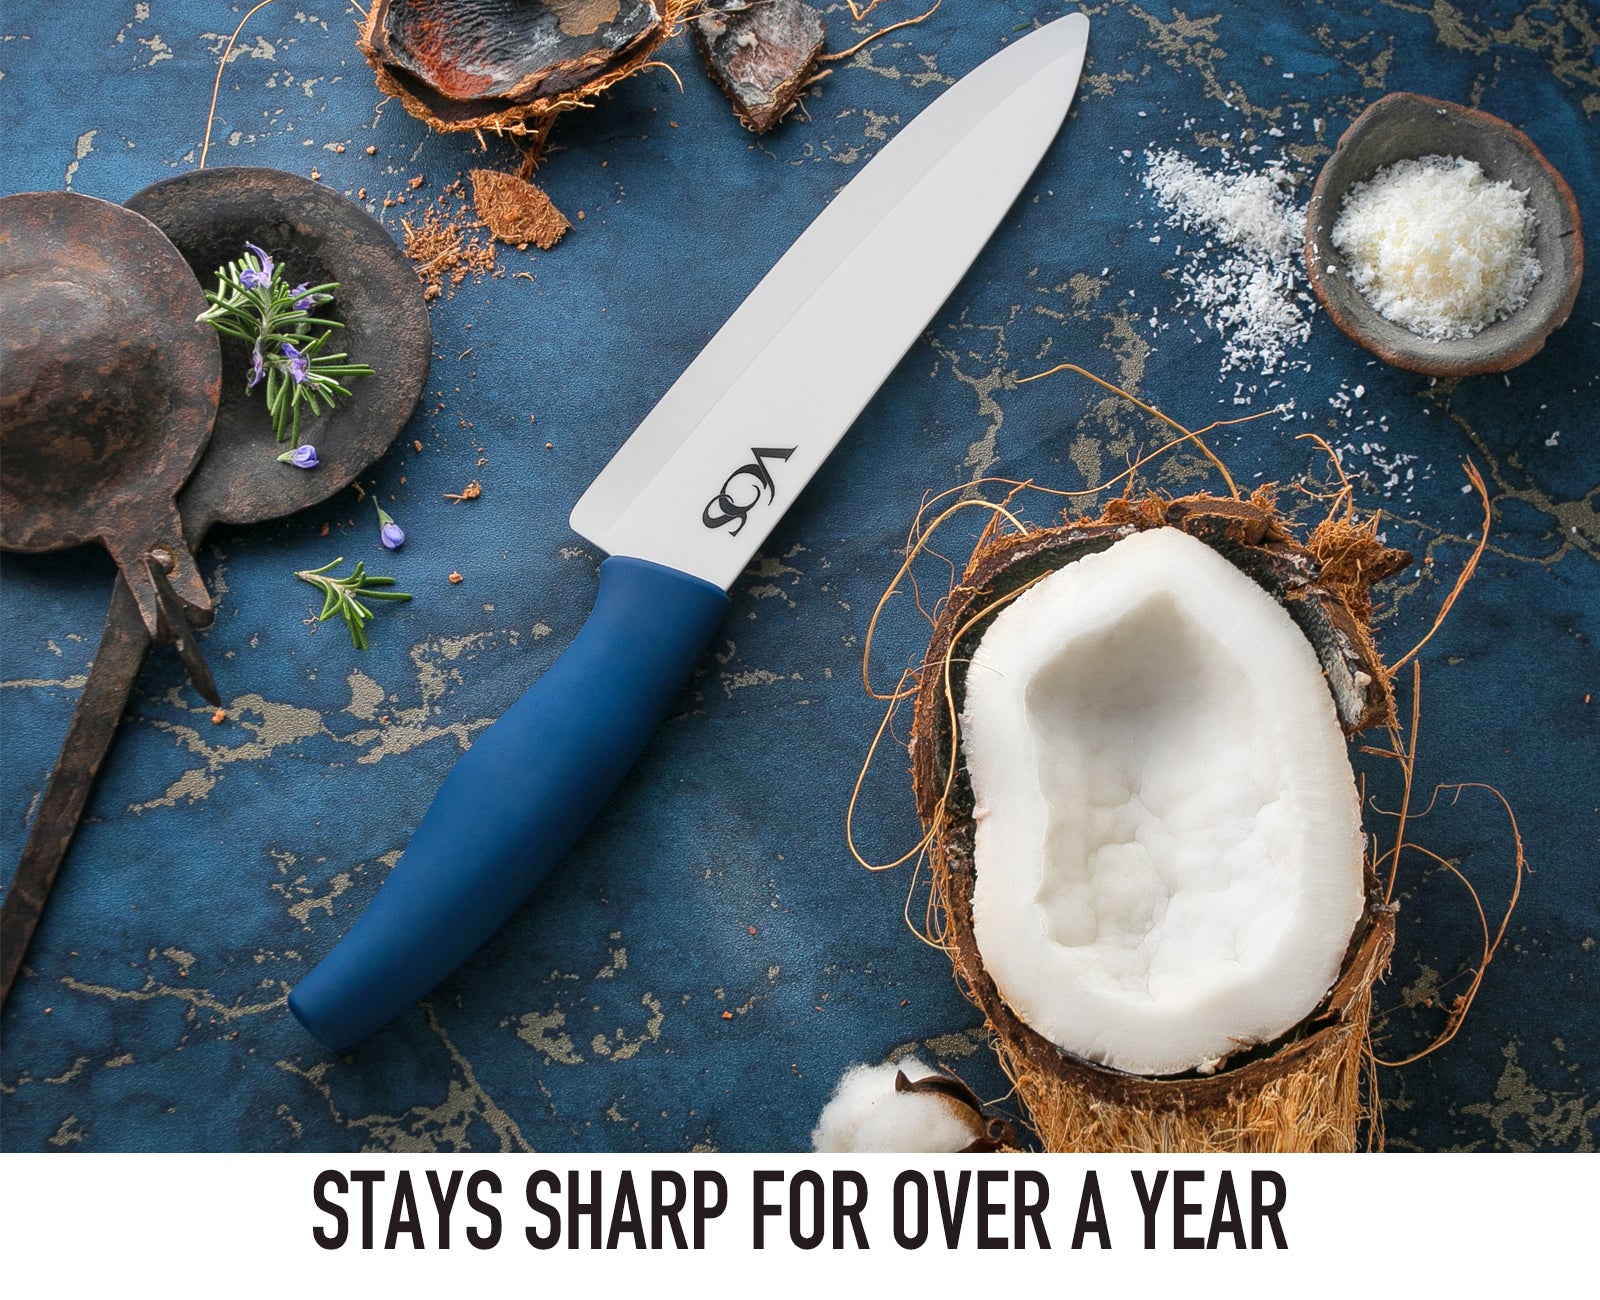 Ceramic Knives set Color Ceramic Knife Set With Sheaths - Super Sharp & Rust  Proof & Stain Resistant (6 Chef Knife, 5 Steak Knife, 4 Fruit Knife,  3Sushi Knife, One Peeler) 